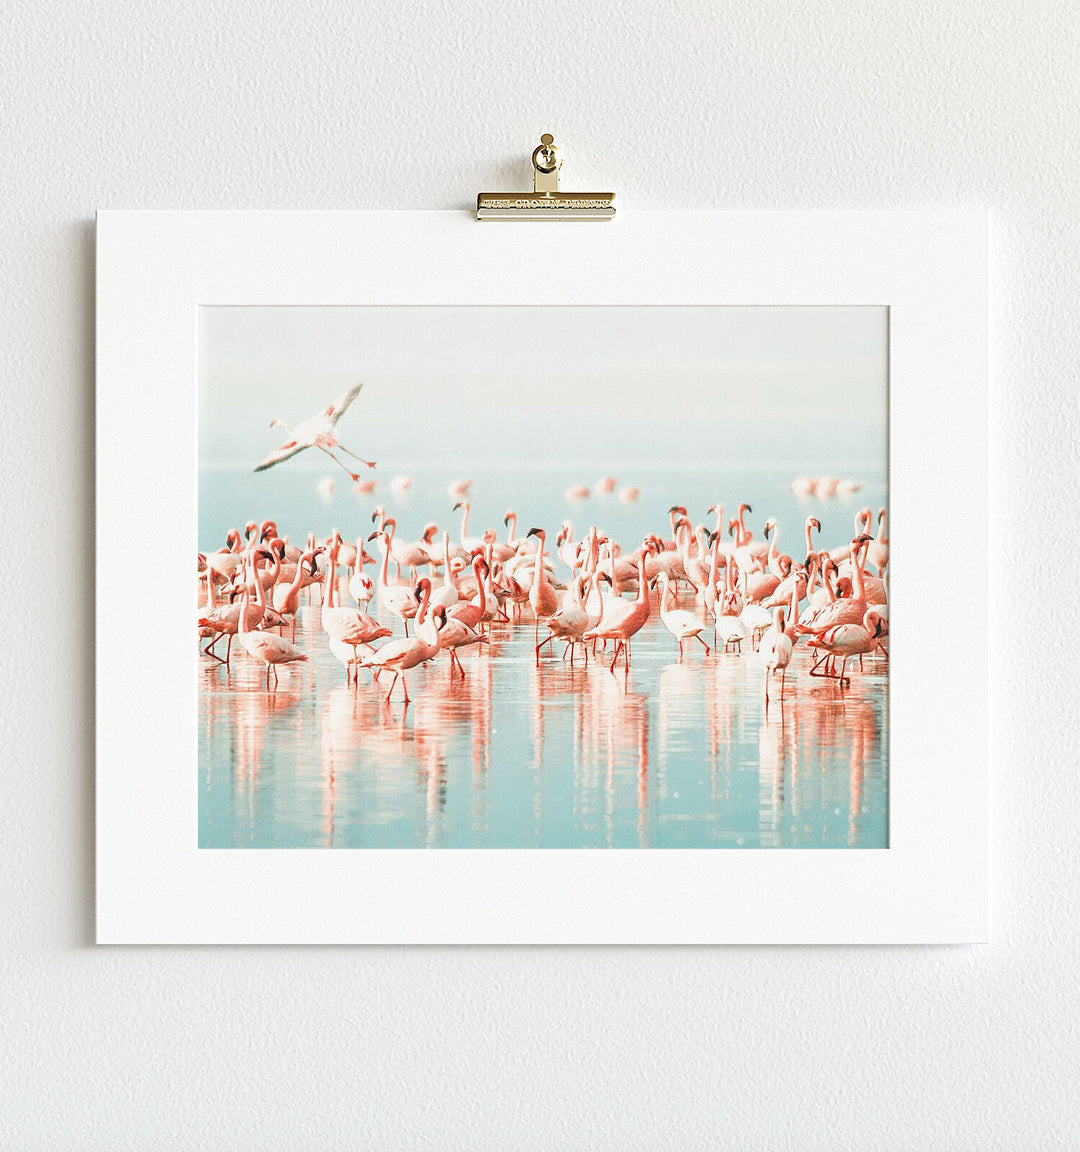 Flamingo flock